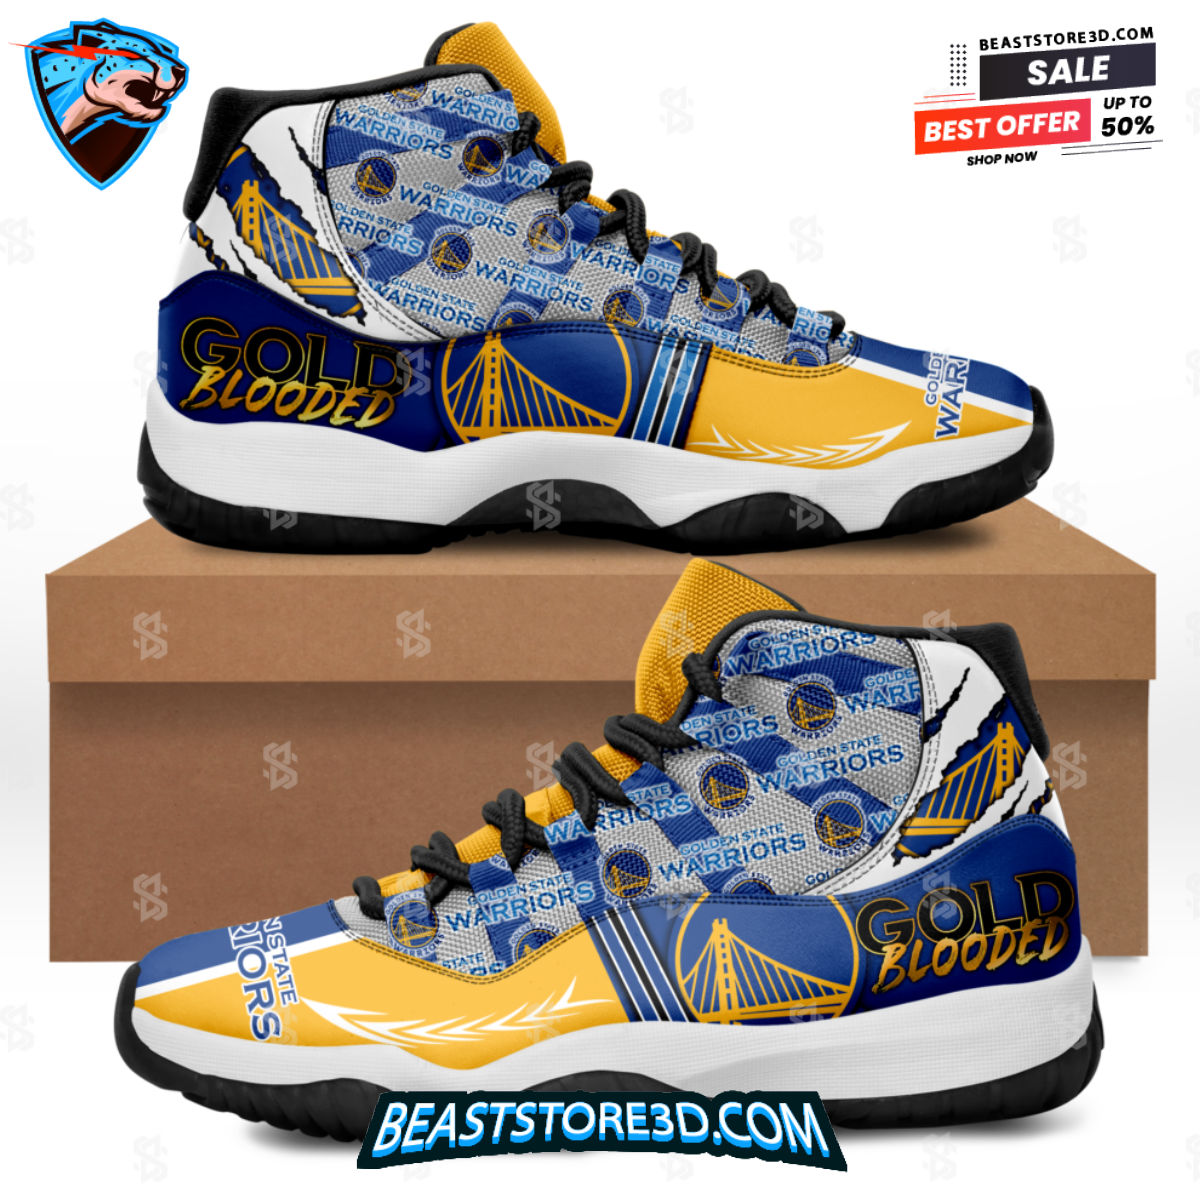 Golden State Warriors Basketball Gold Blooded Air Jordan 11 Shoes